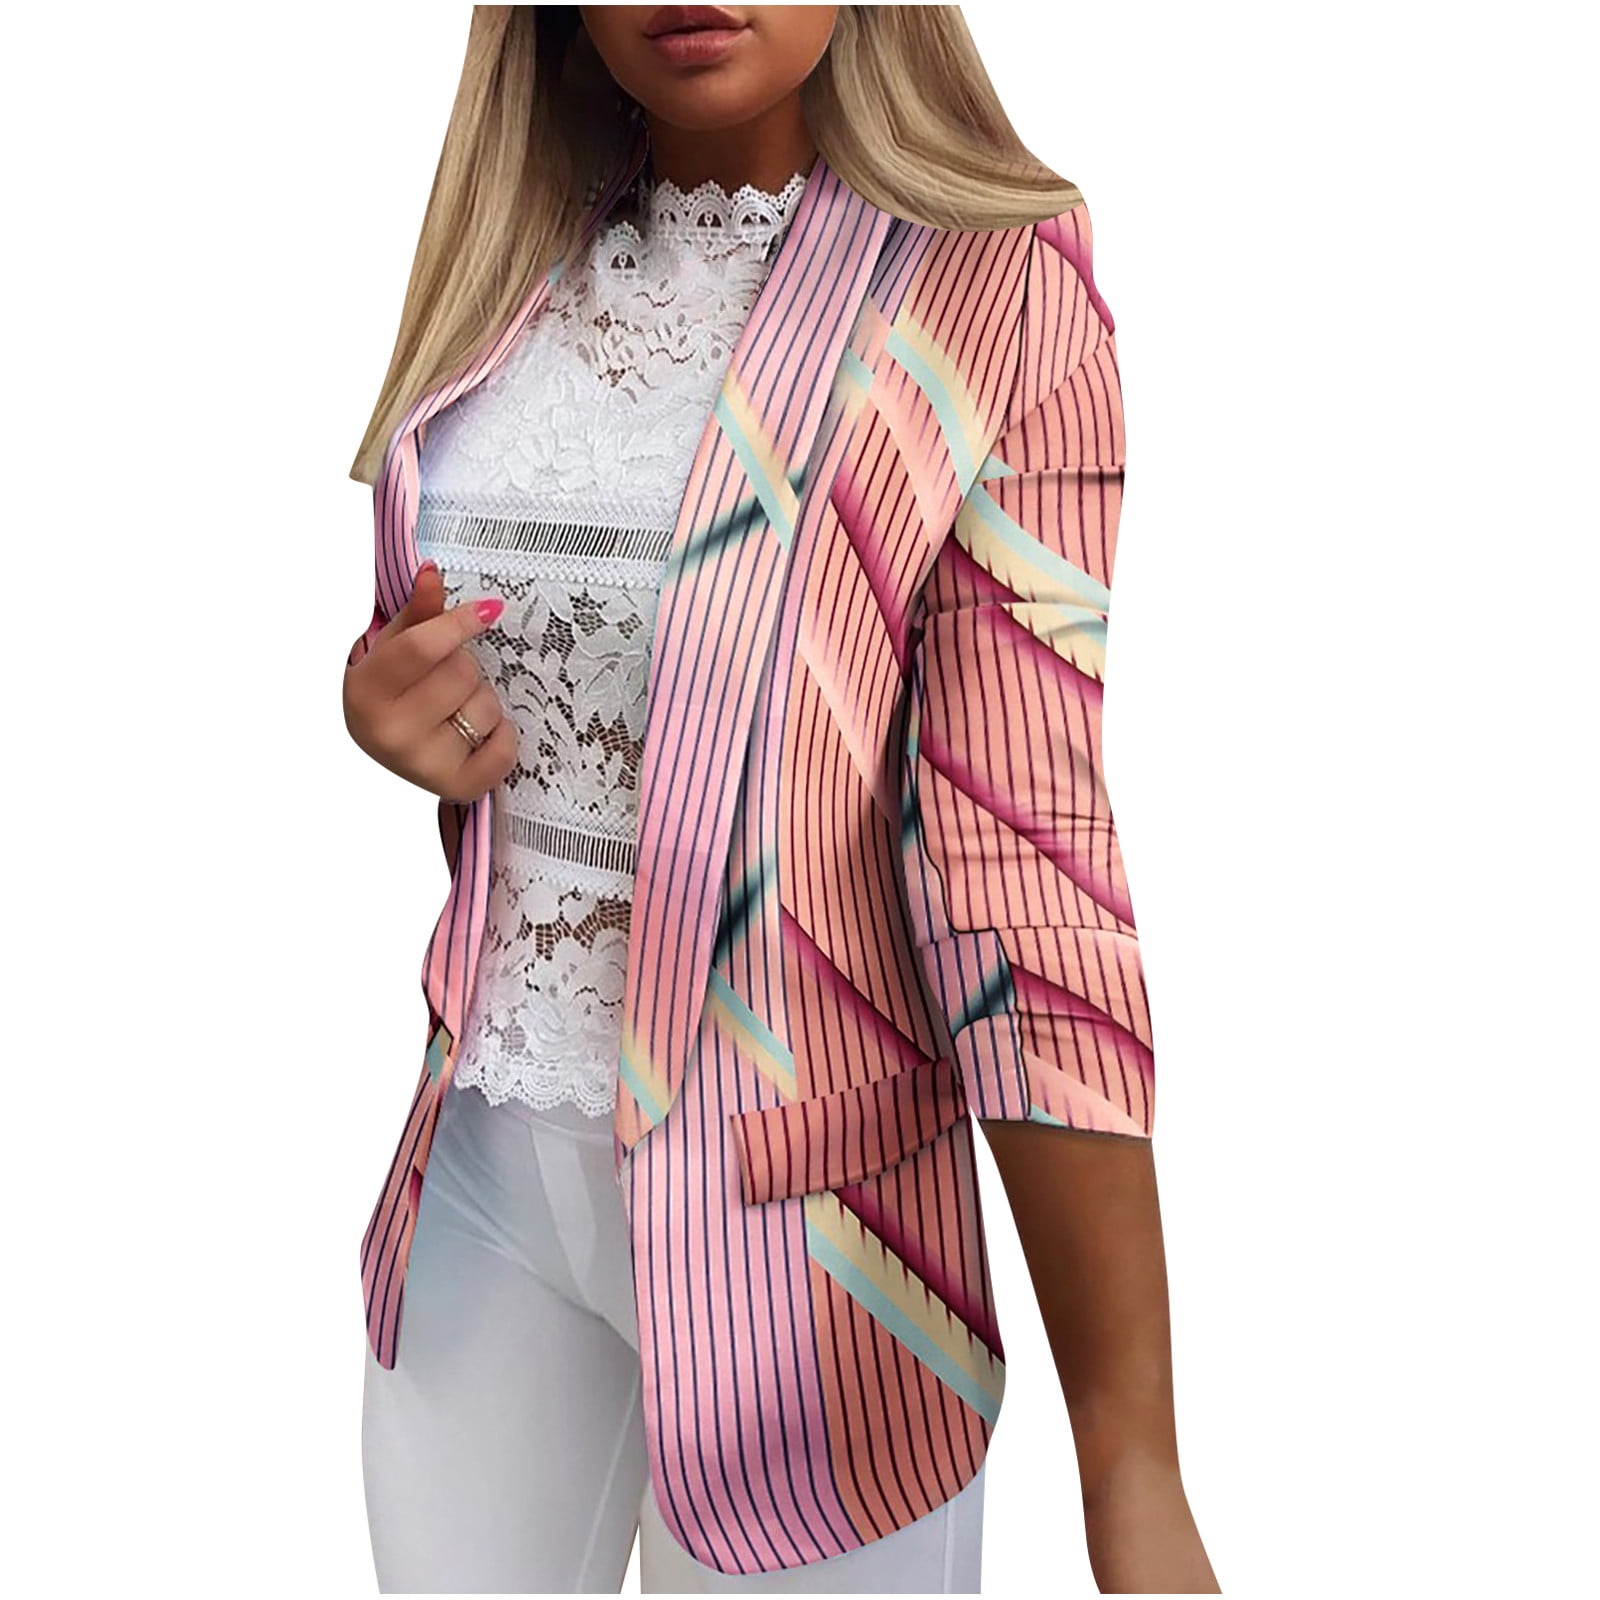 Olyvenn Midi Blazer Cardigan Top Jacket Coat With Pocket Women